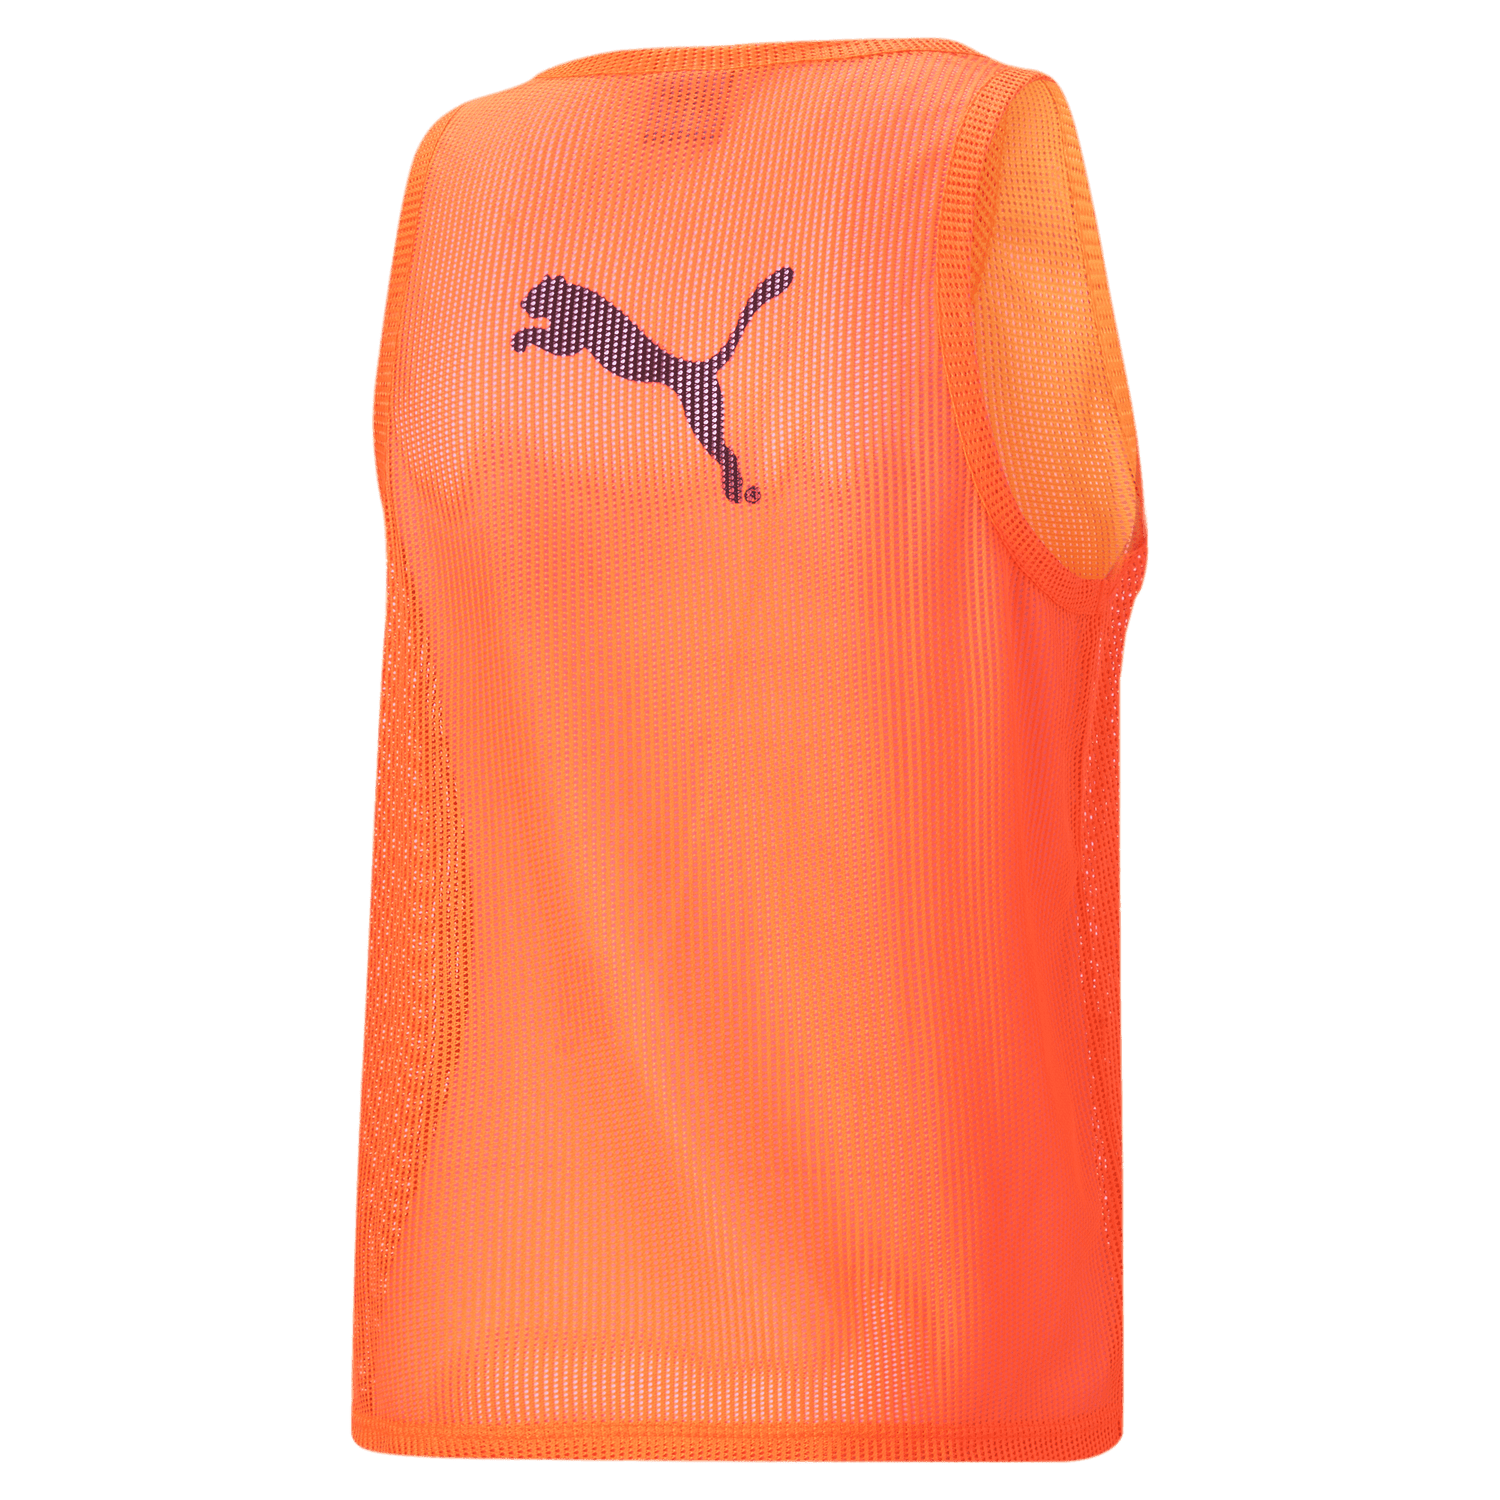 Puma Mens Training Vest Orange (Back)